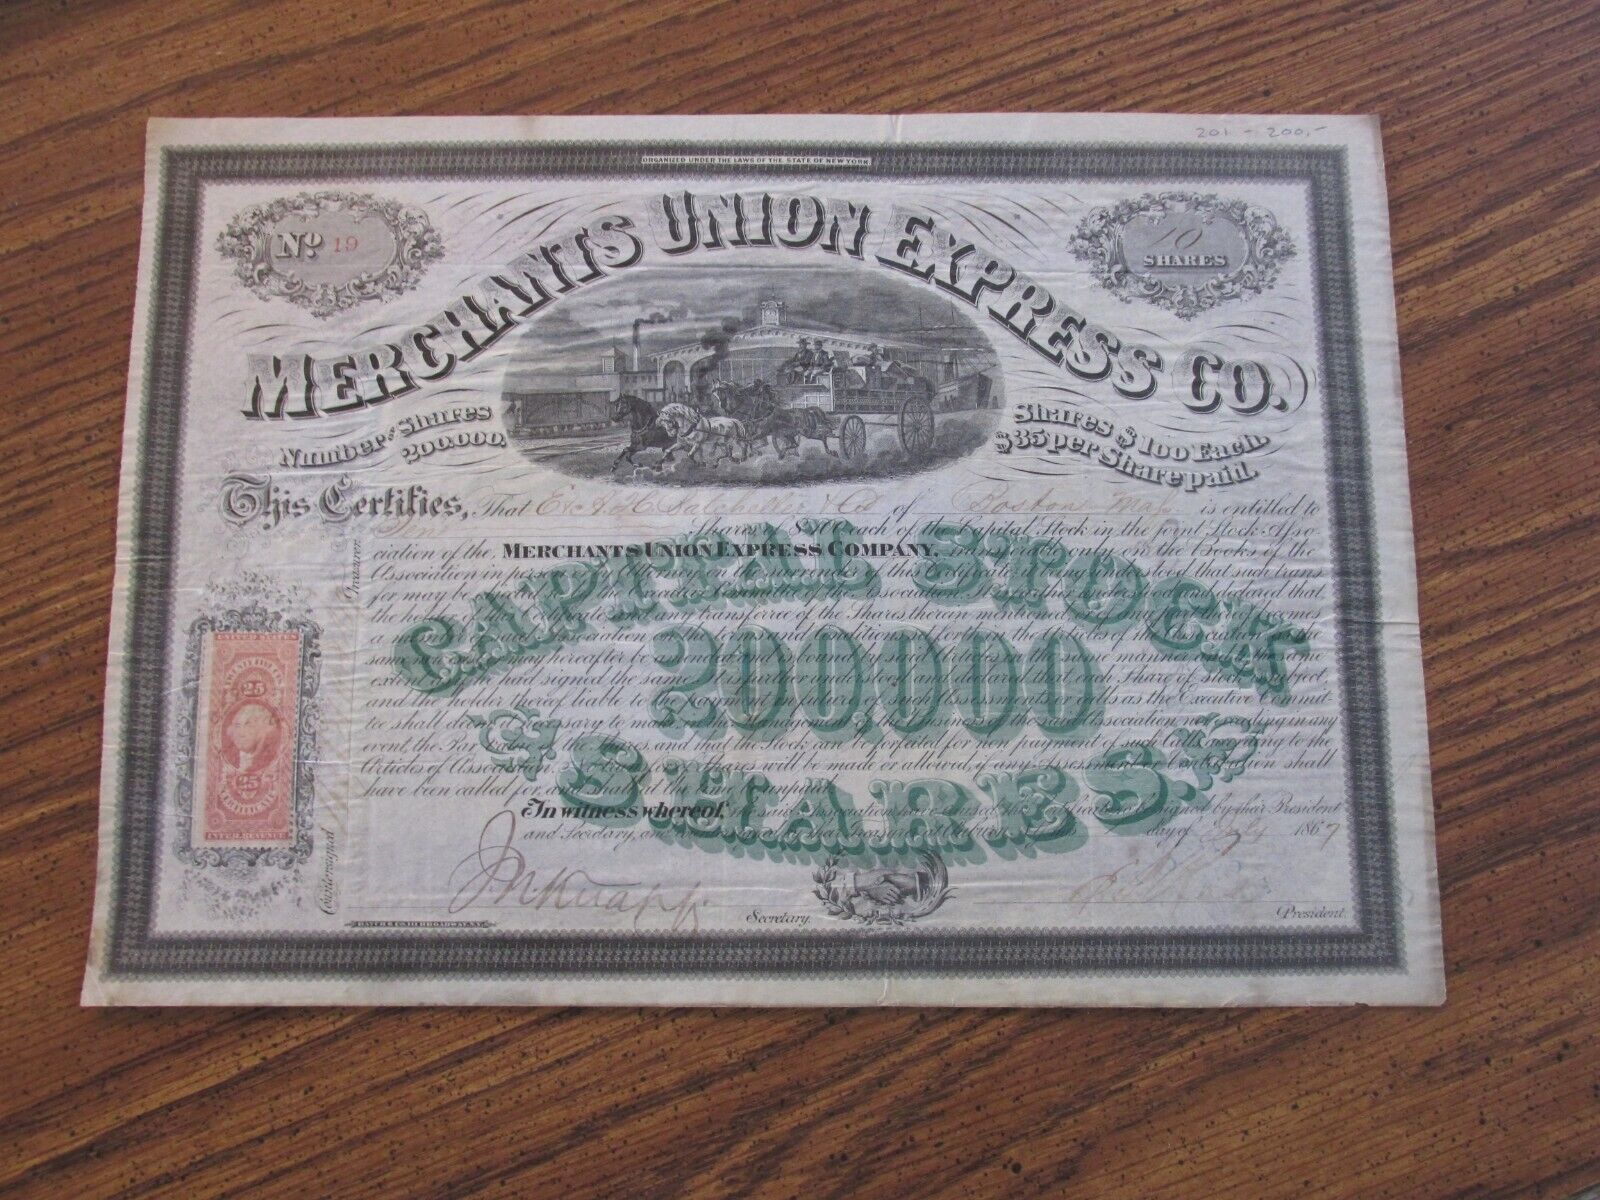 Merchants Union Express co 10 shares certificate #I 1867